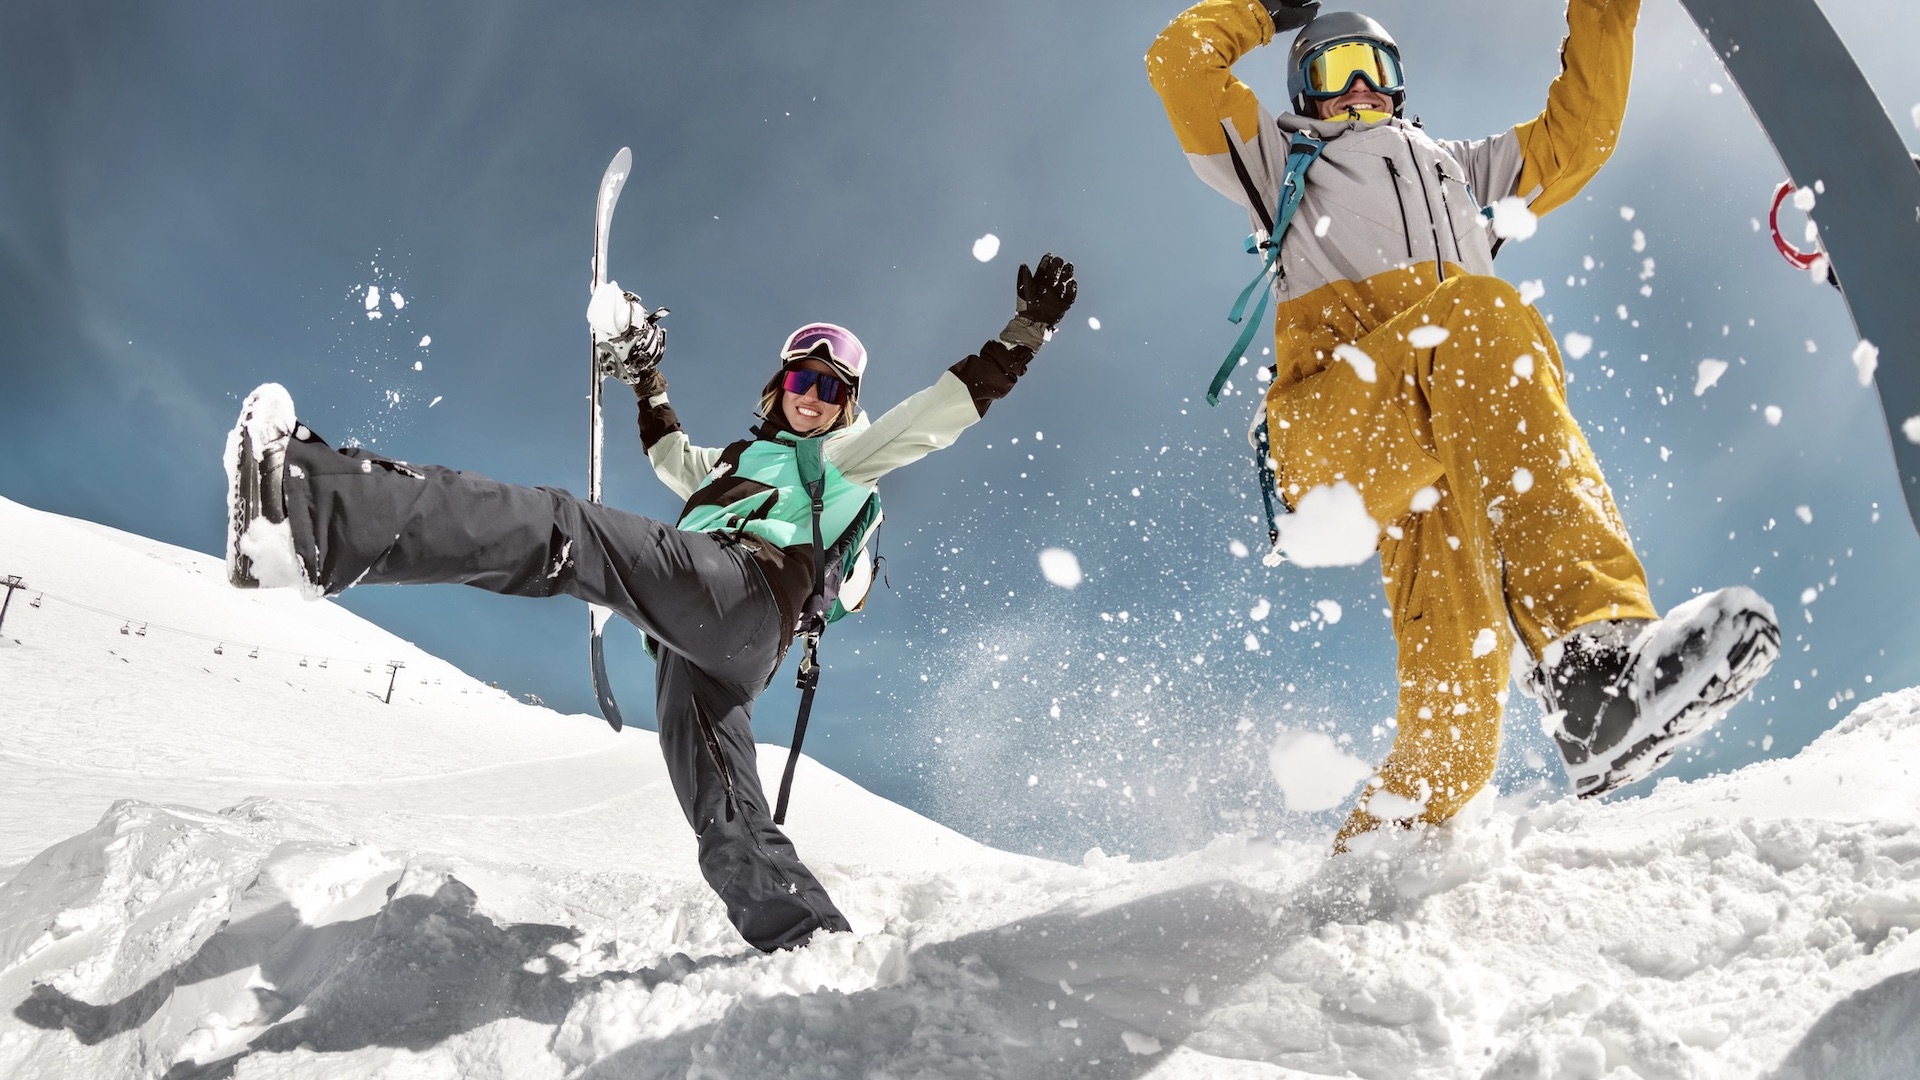 320 Best Ski wear ideas  ski wear, skiing outfit, ski fashion